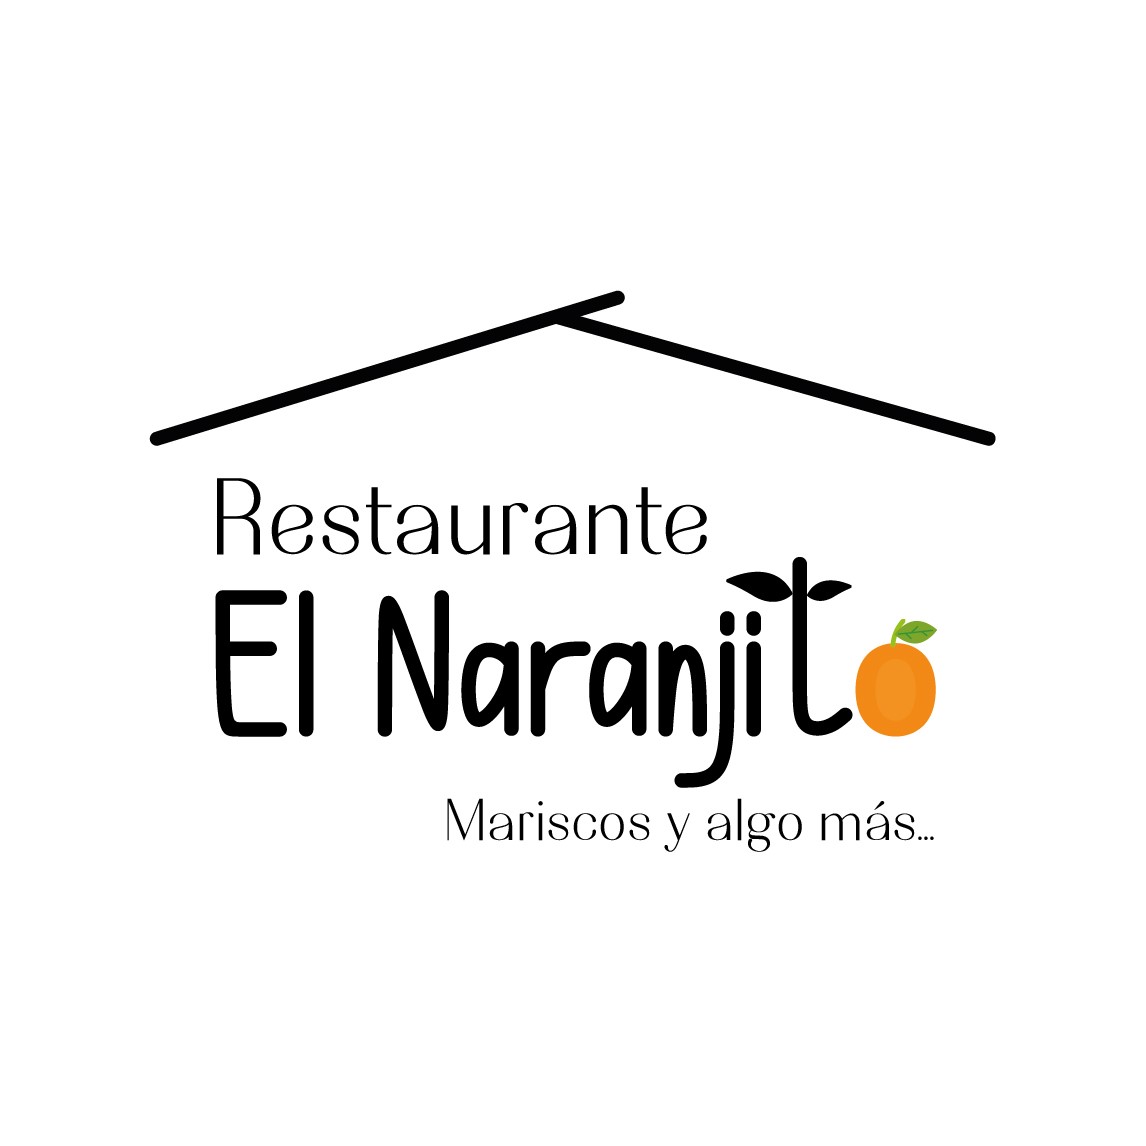 Restaurant El Naranjito